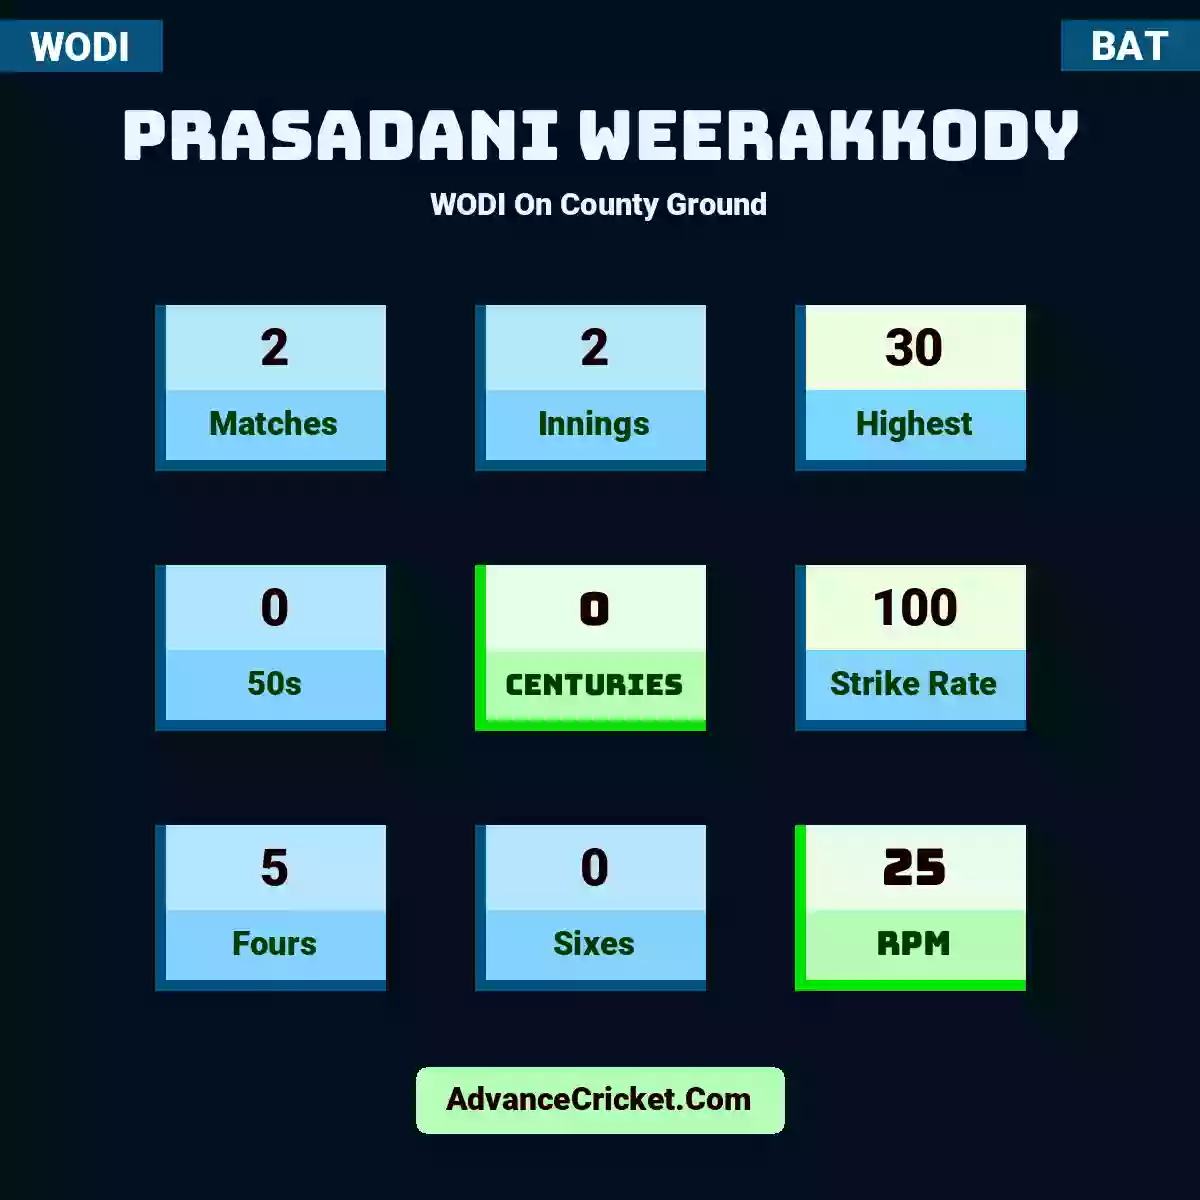 Prasadani Weerakkody WODI  On County Ground, Prasadani Weerakkody played 1 matches, scored 1 runs as highest, 0 half-centuries, and 0 centuries, with a strike rate of 20. P.Weerakkody hit 0 fours and 0 sixes, with an RPM of 1.